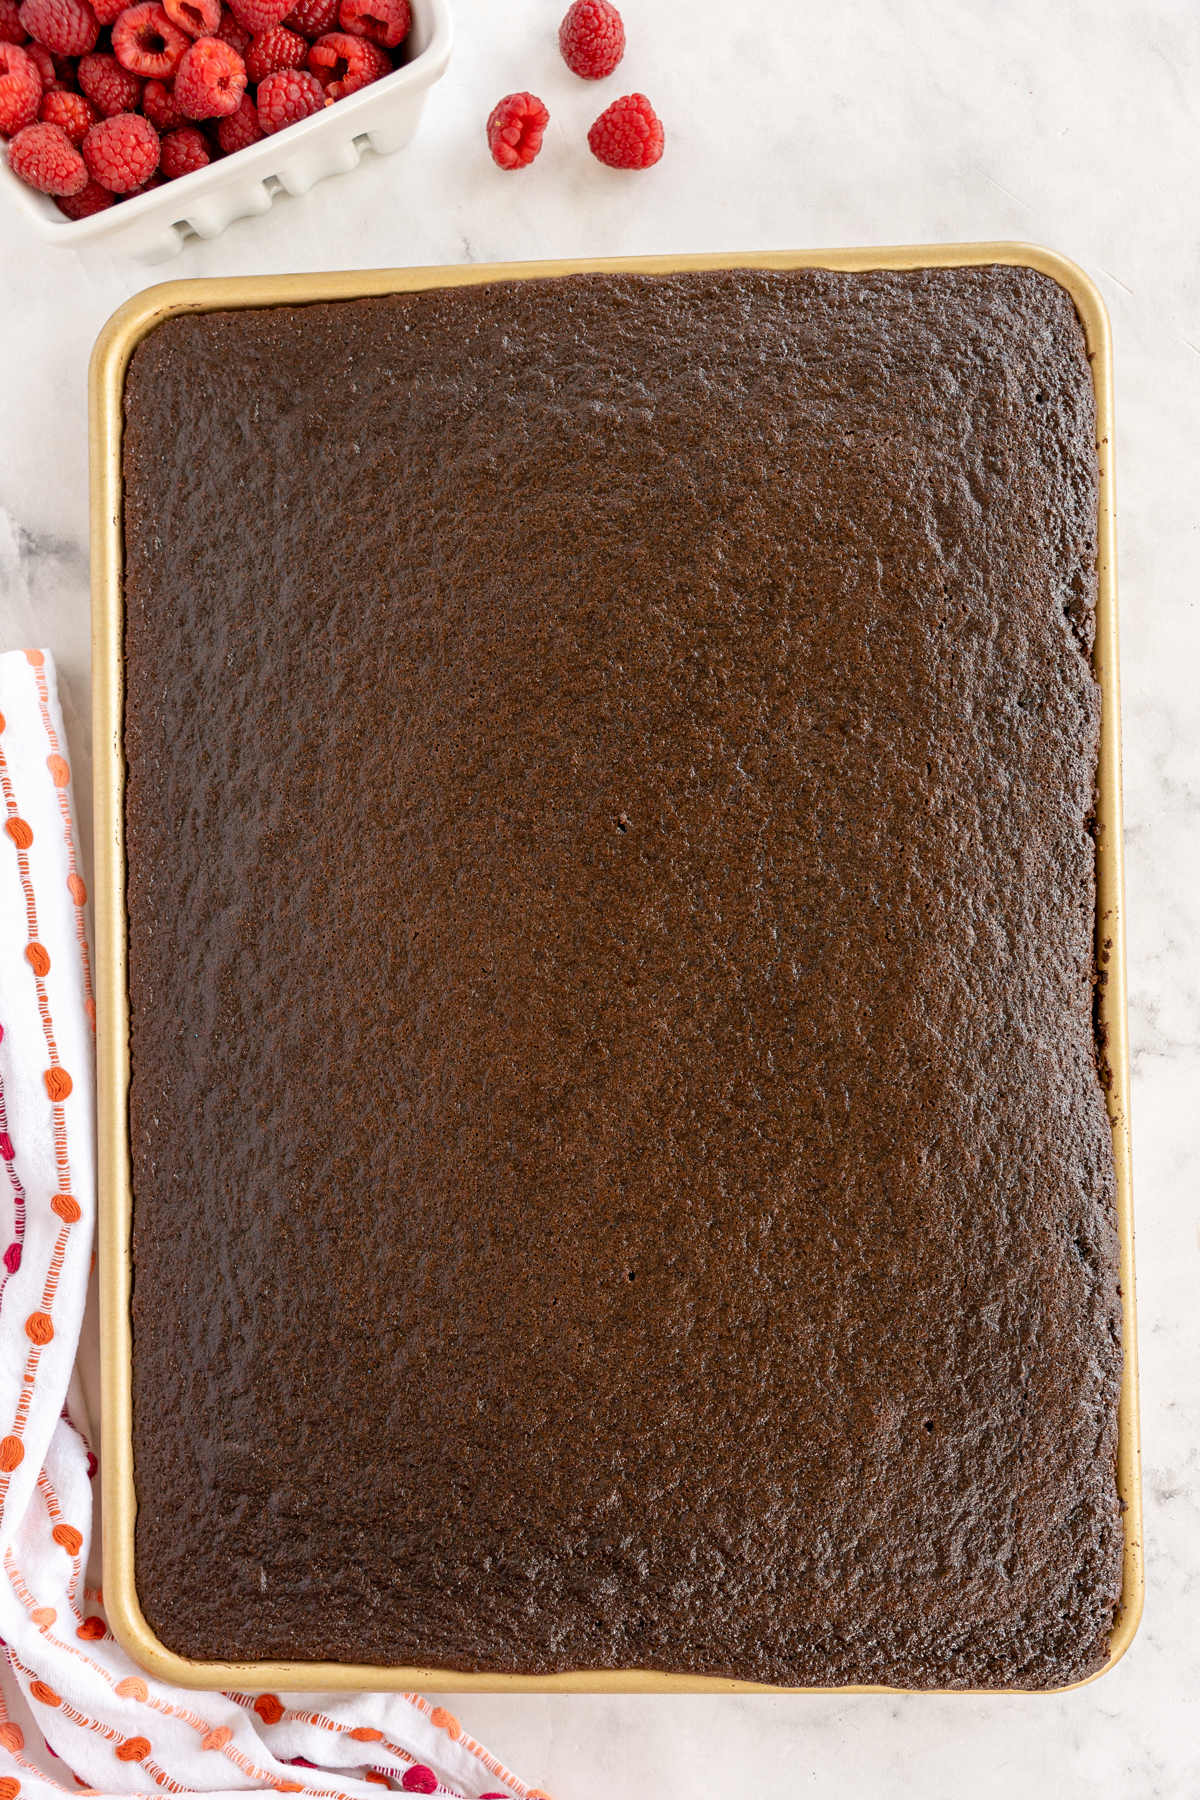 baked chocolate cake in a sheet pan